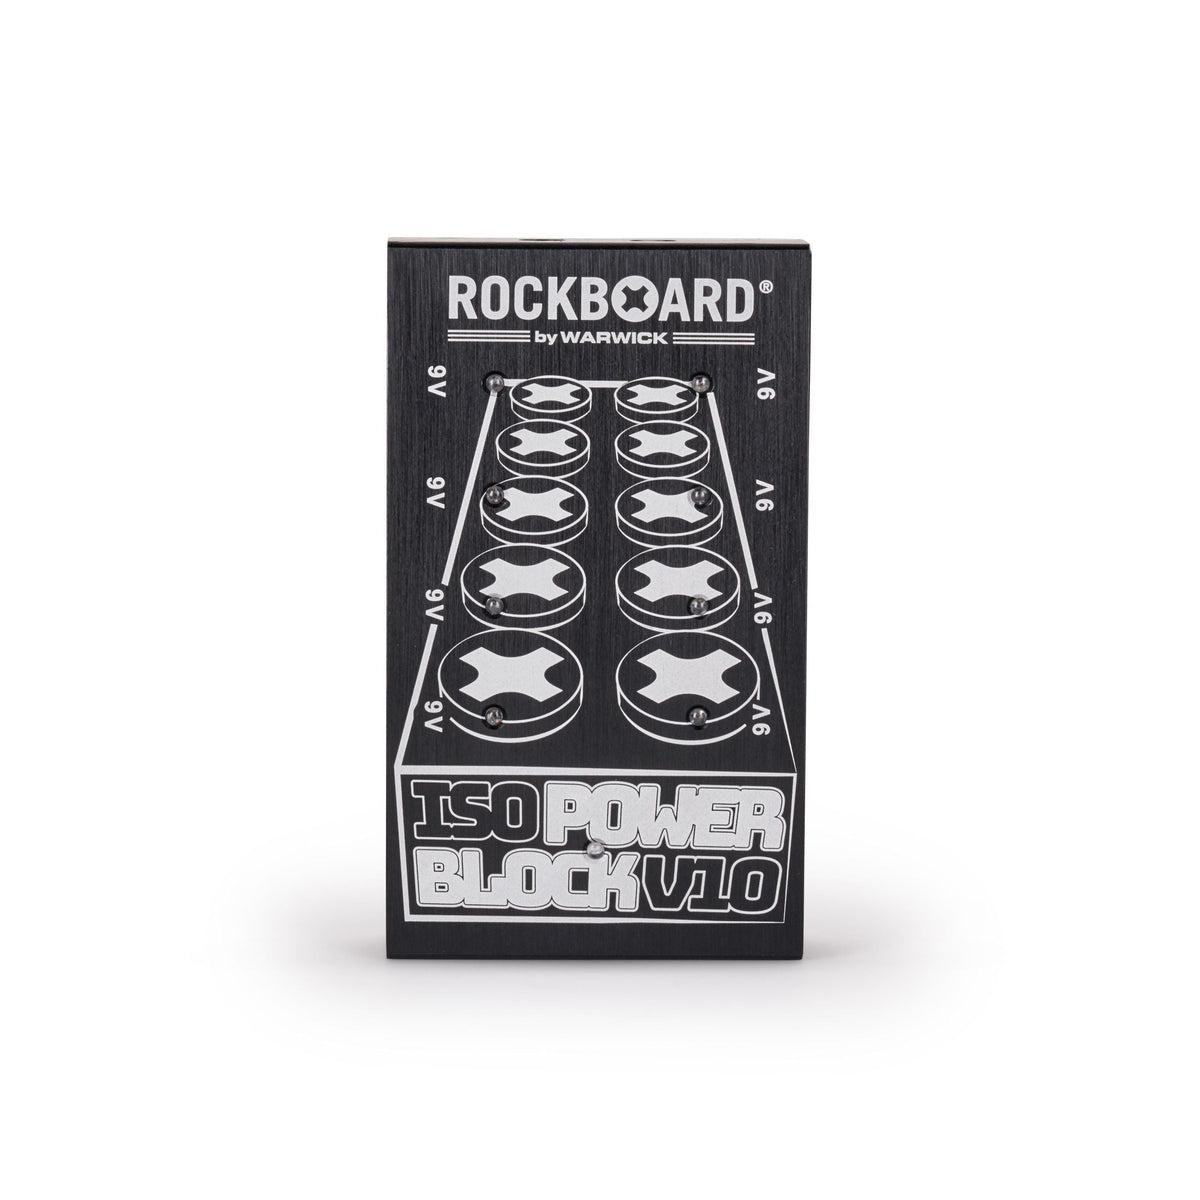 Rockboard Iso Power Block v10